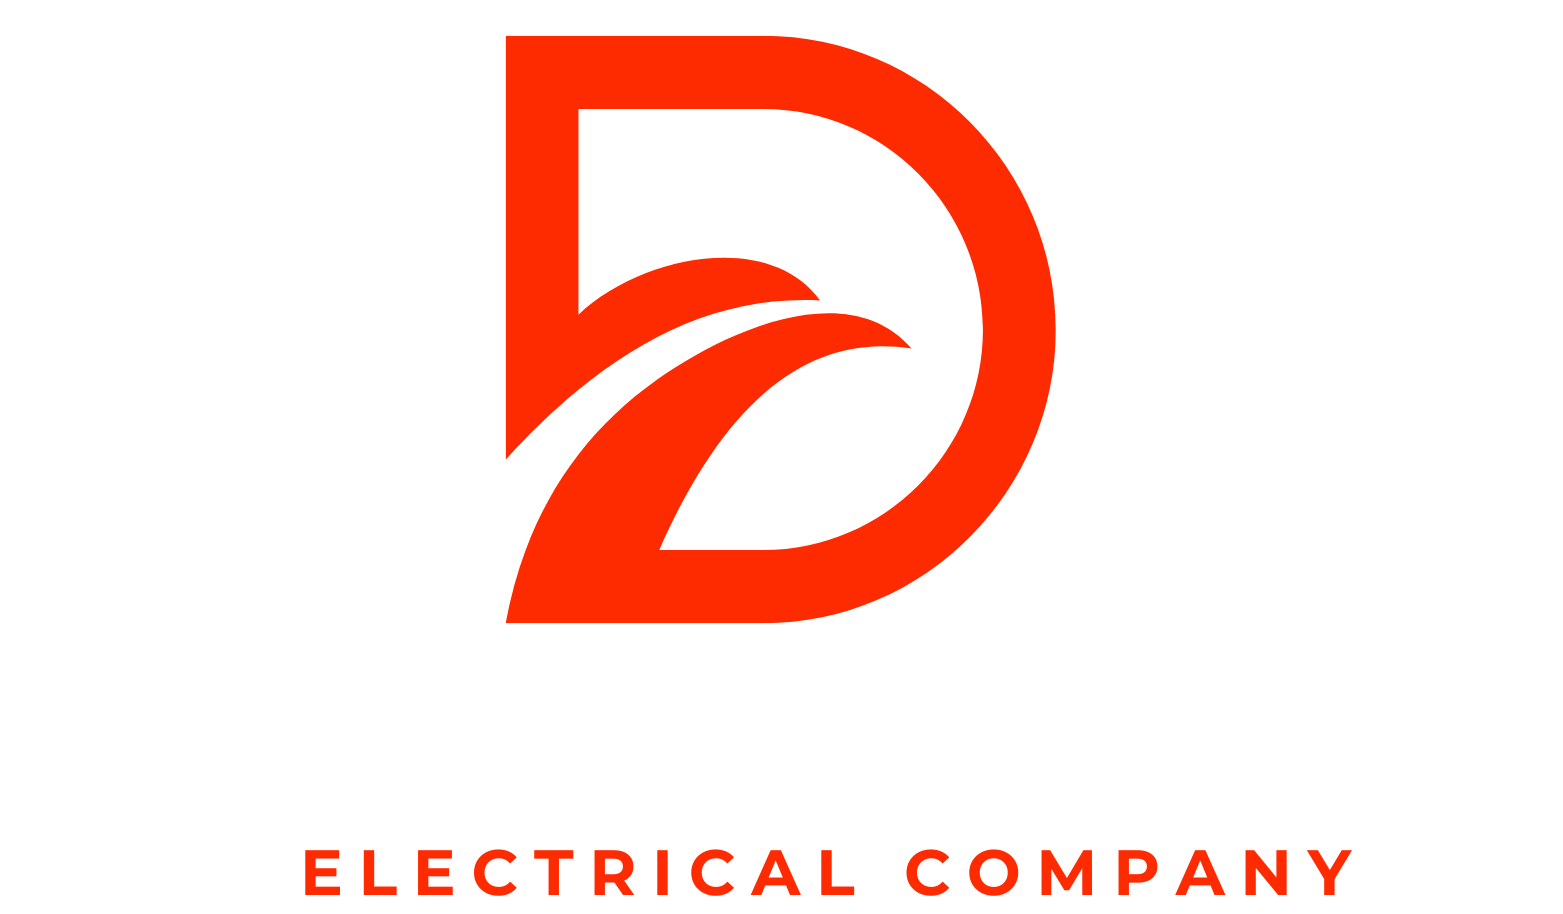 Das Electronics - Electrical Company